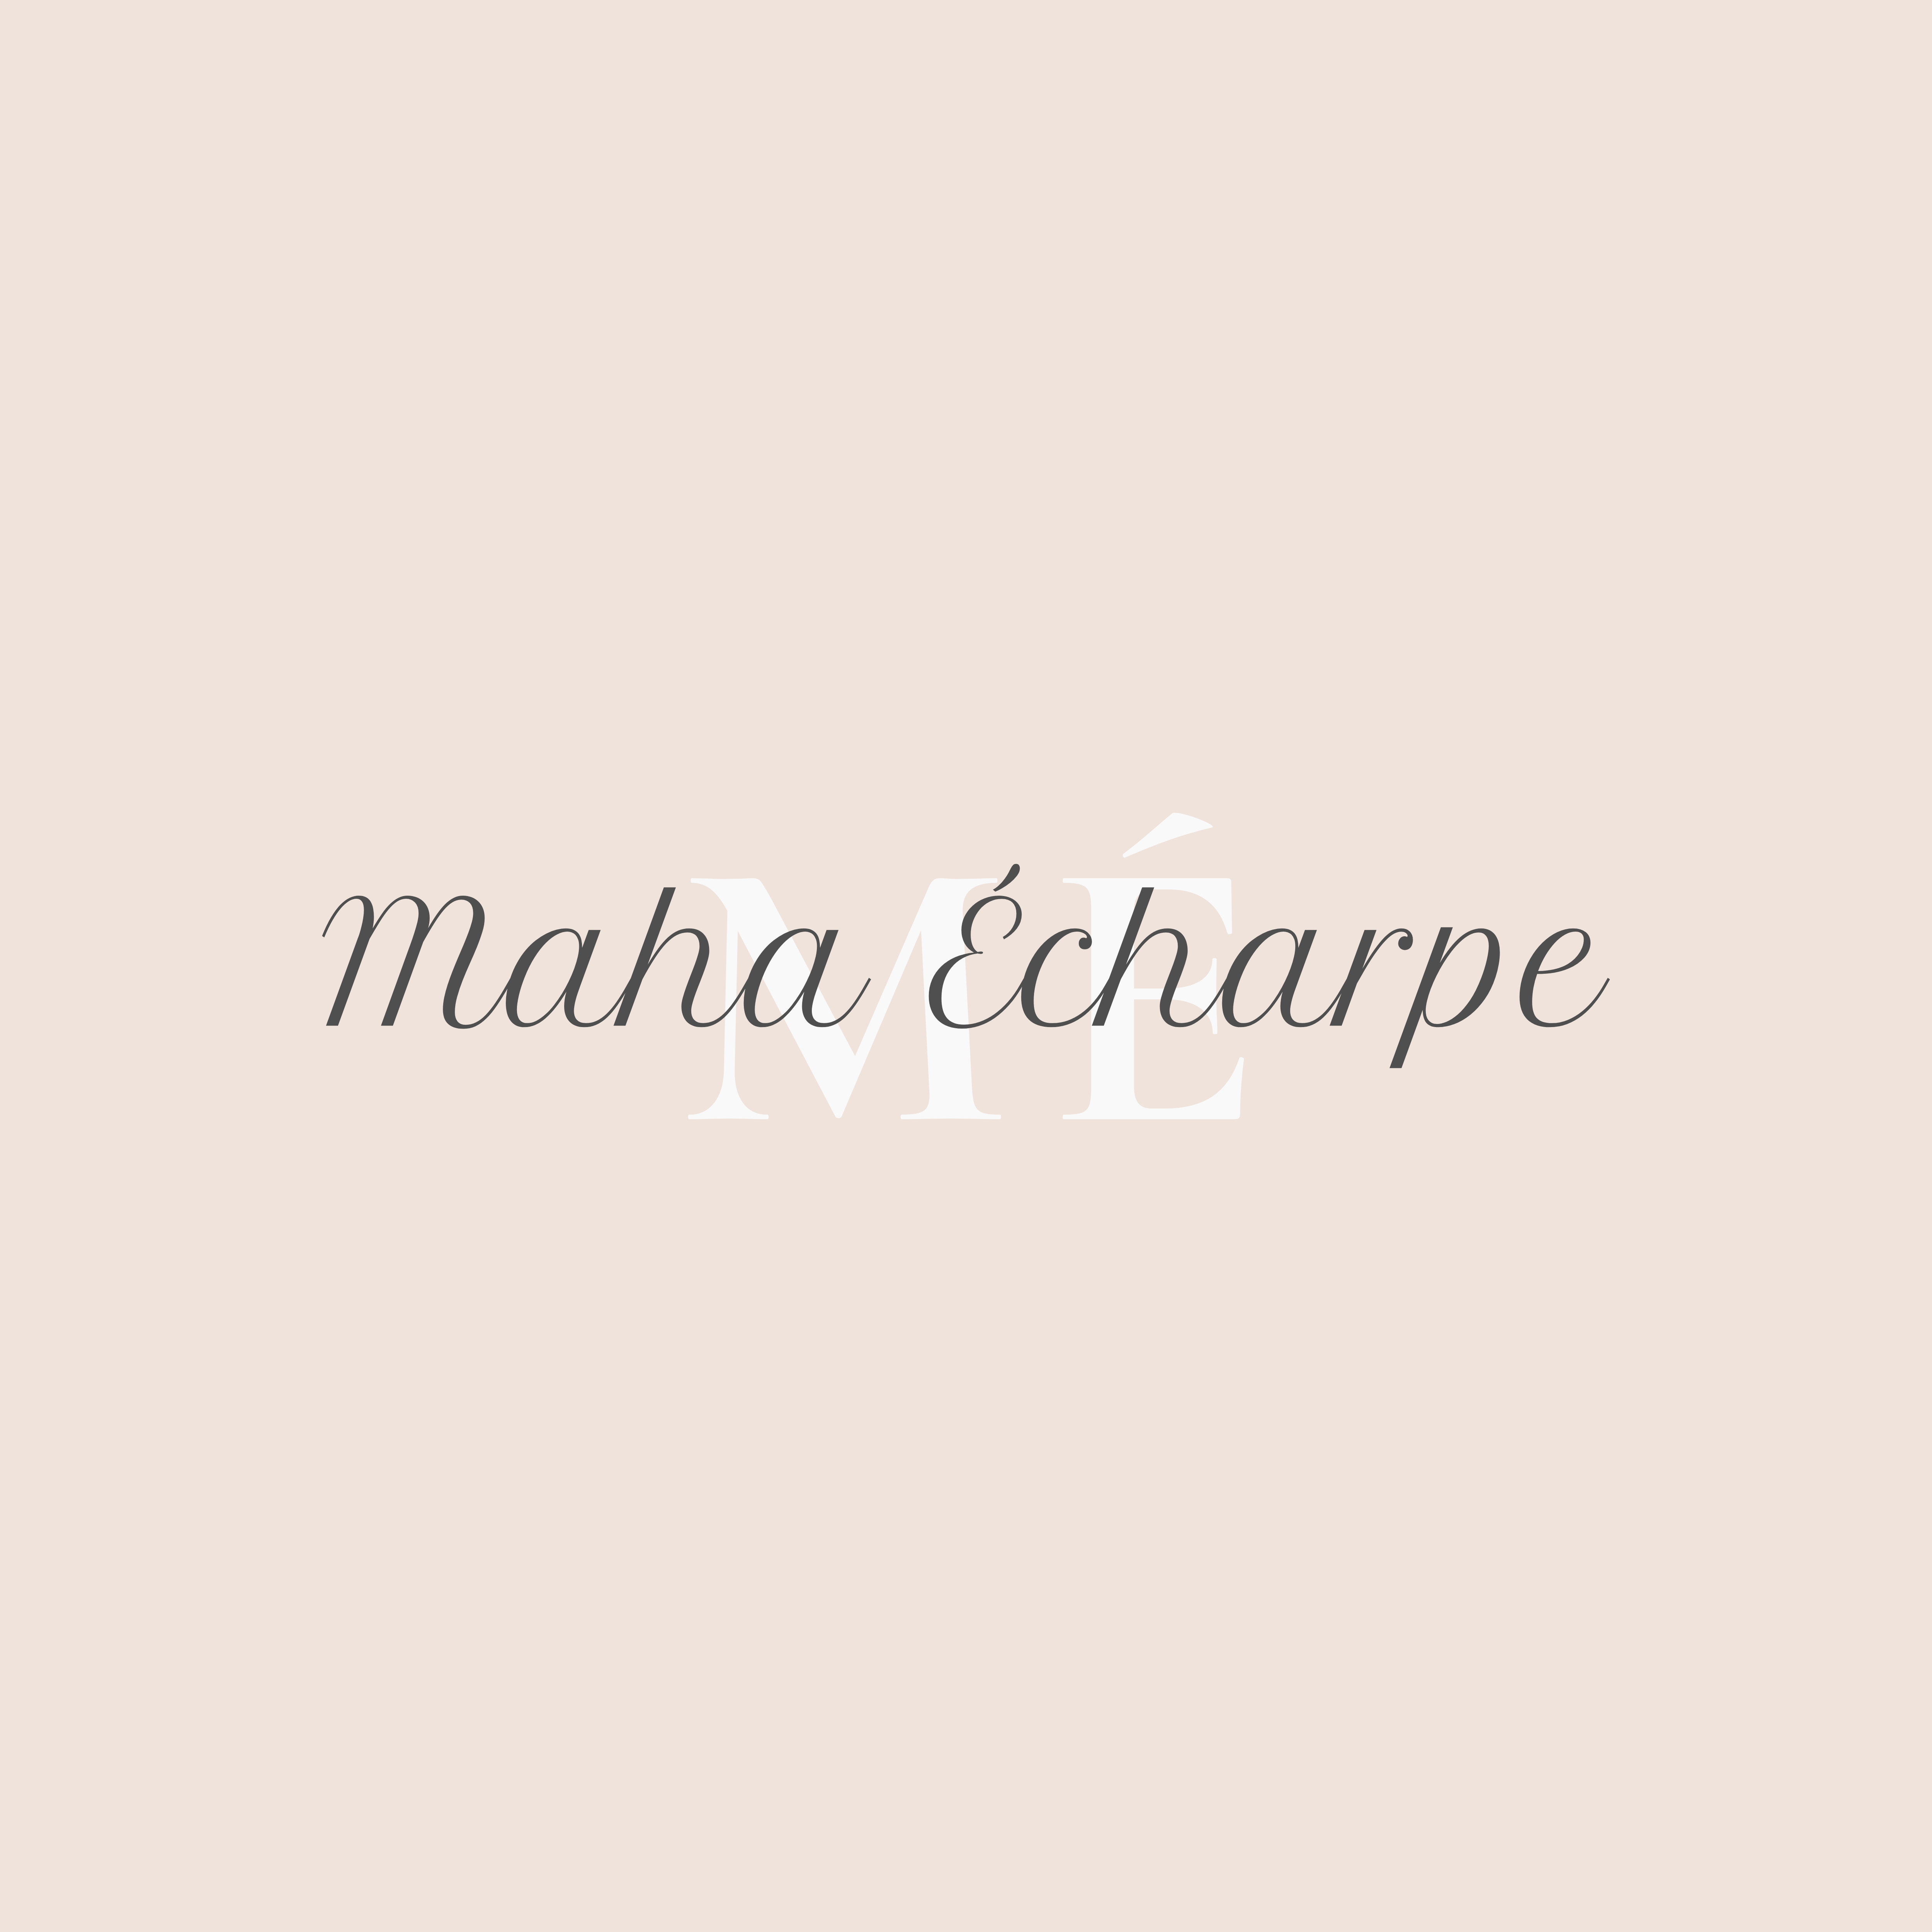 Maha Echarpe